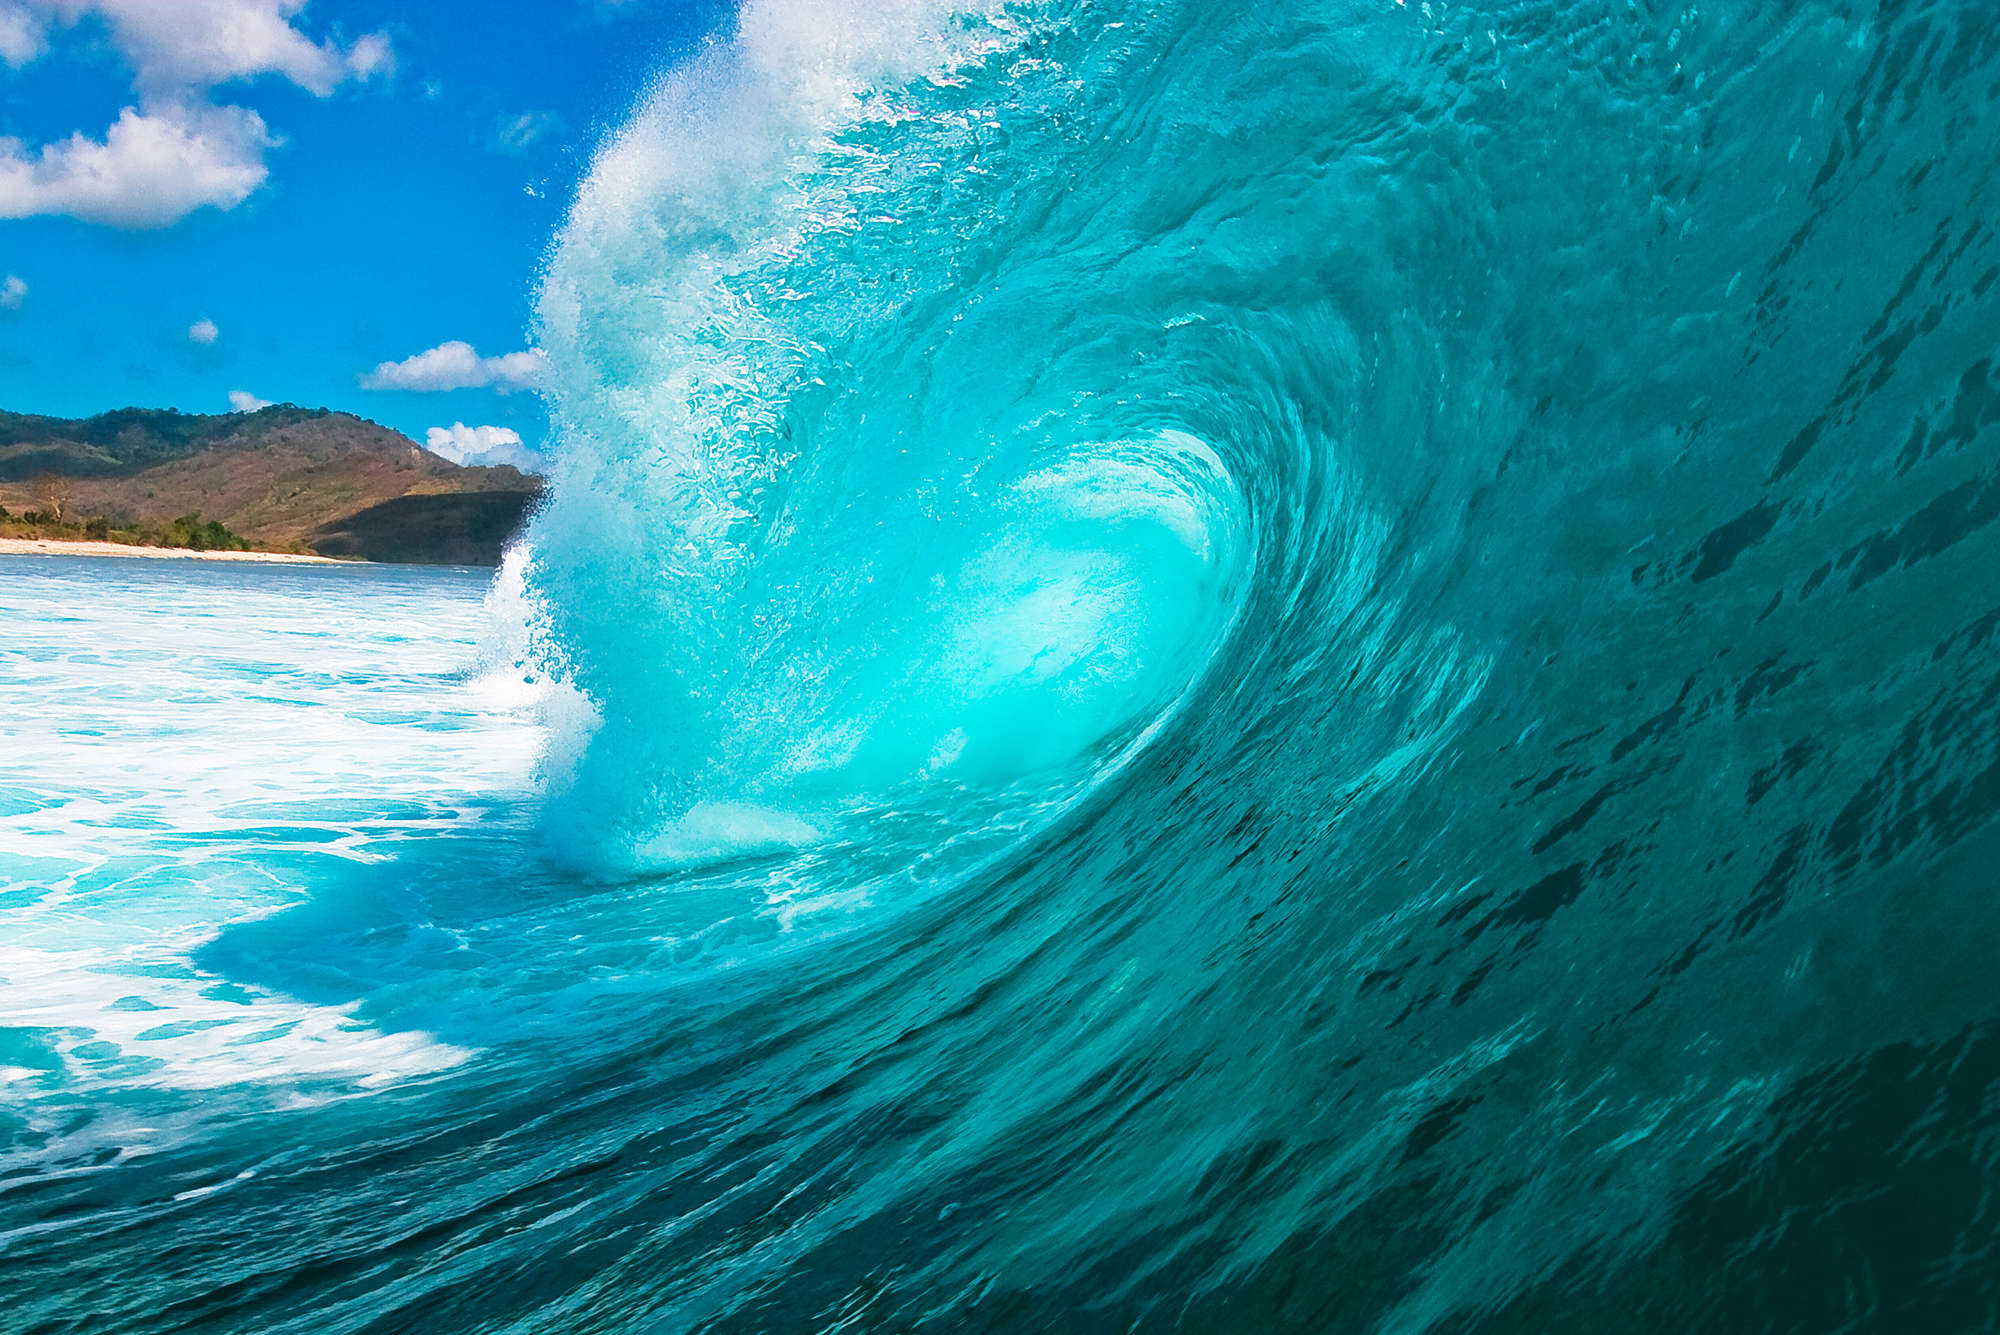             Fototapete Meer mit großer Welle – Mattes Glattvlies
        